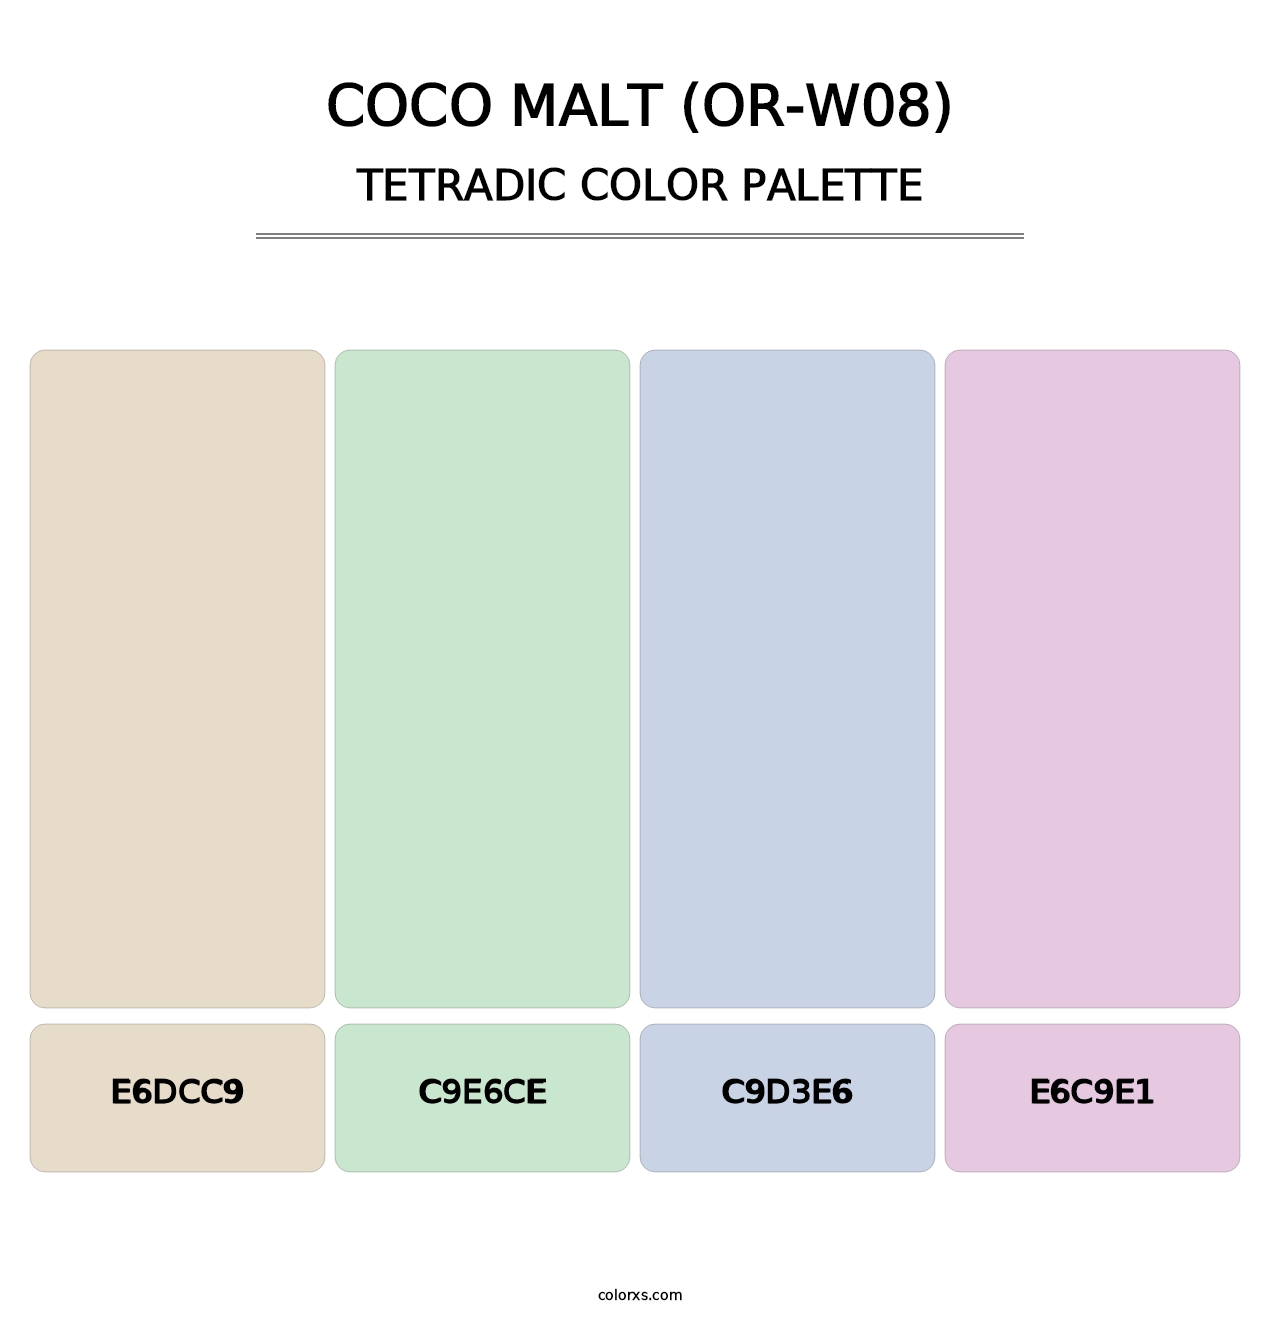 Coco Malt (OR-W08) - Tetradic Color Palette